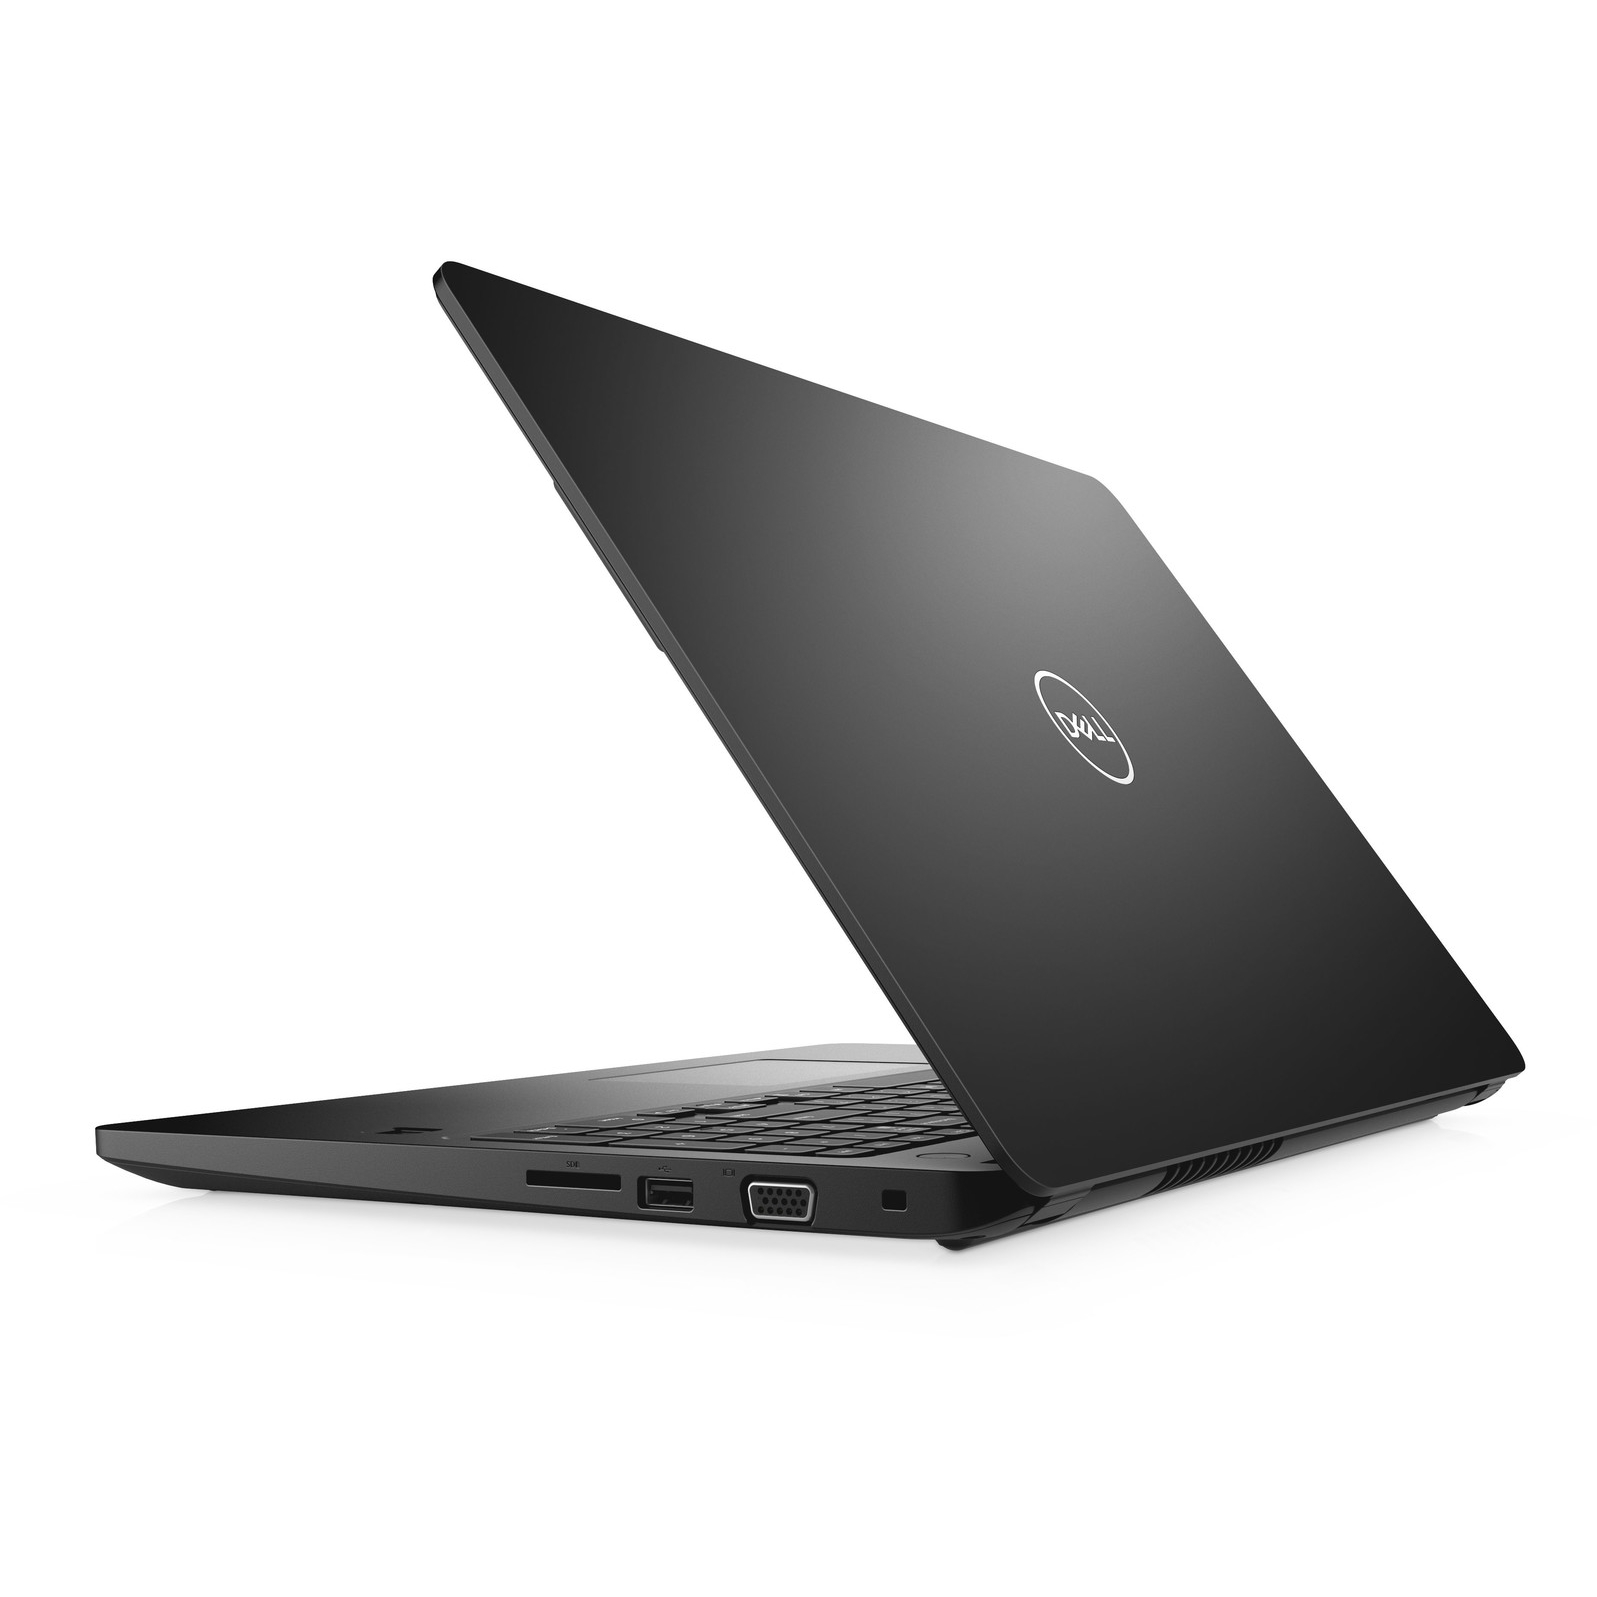 Dell Refurbished Dell Latitude 3580 Intel Core i7-7500U X2 2.7GHz 8GB 256GB SSD 15.6", Black (Certified Refurbished)